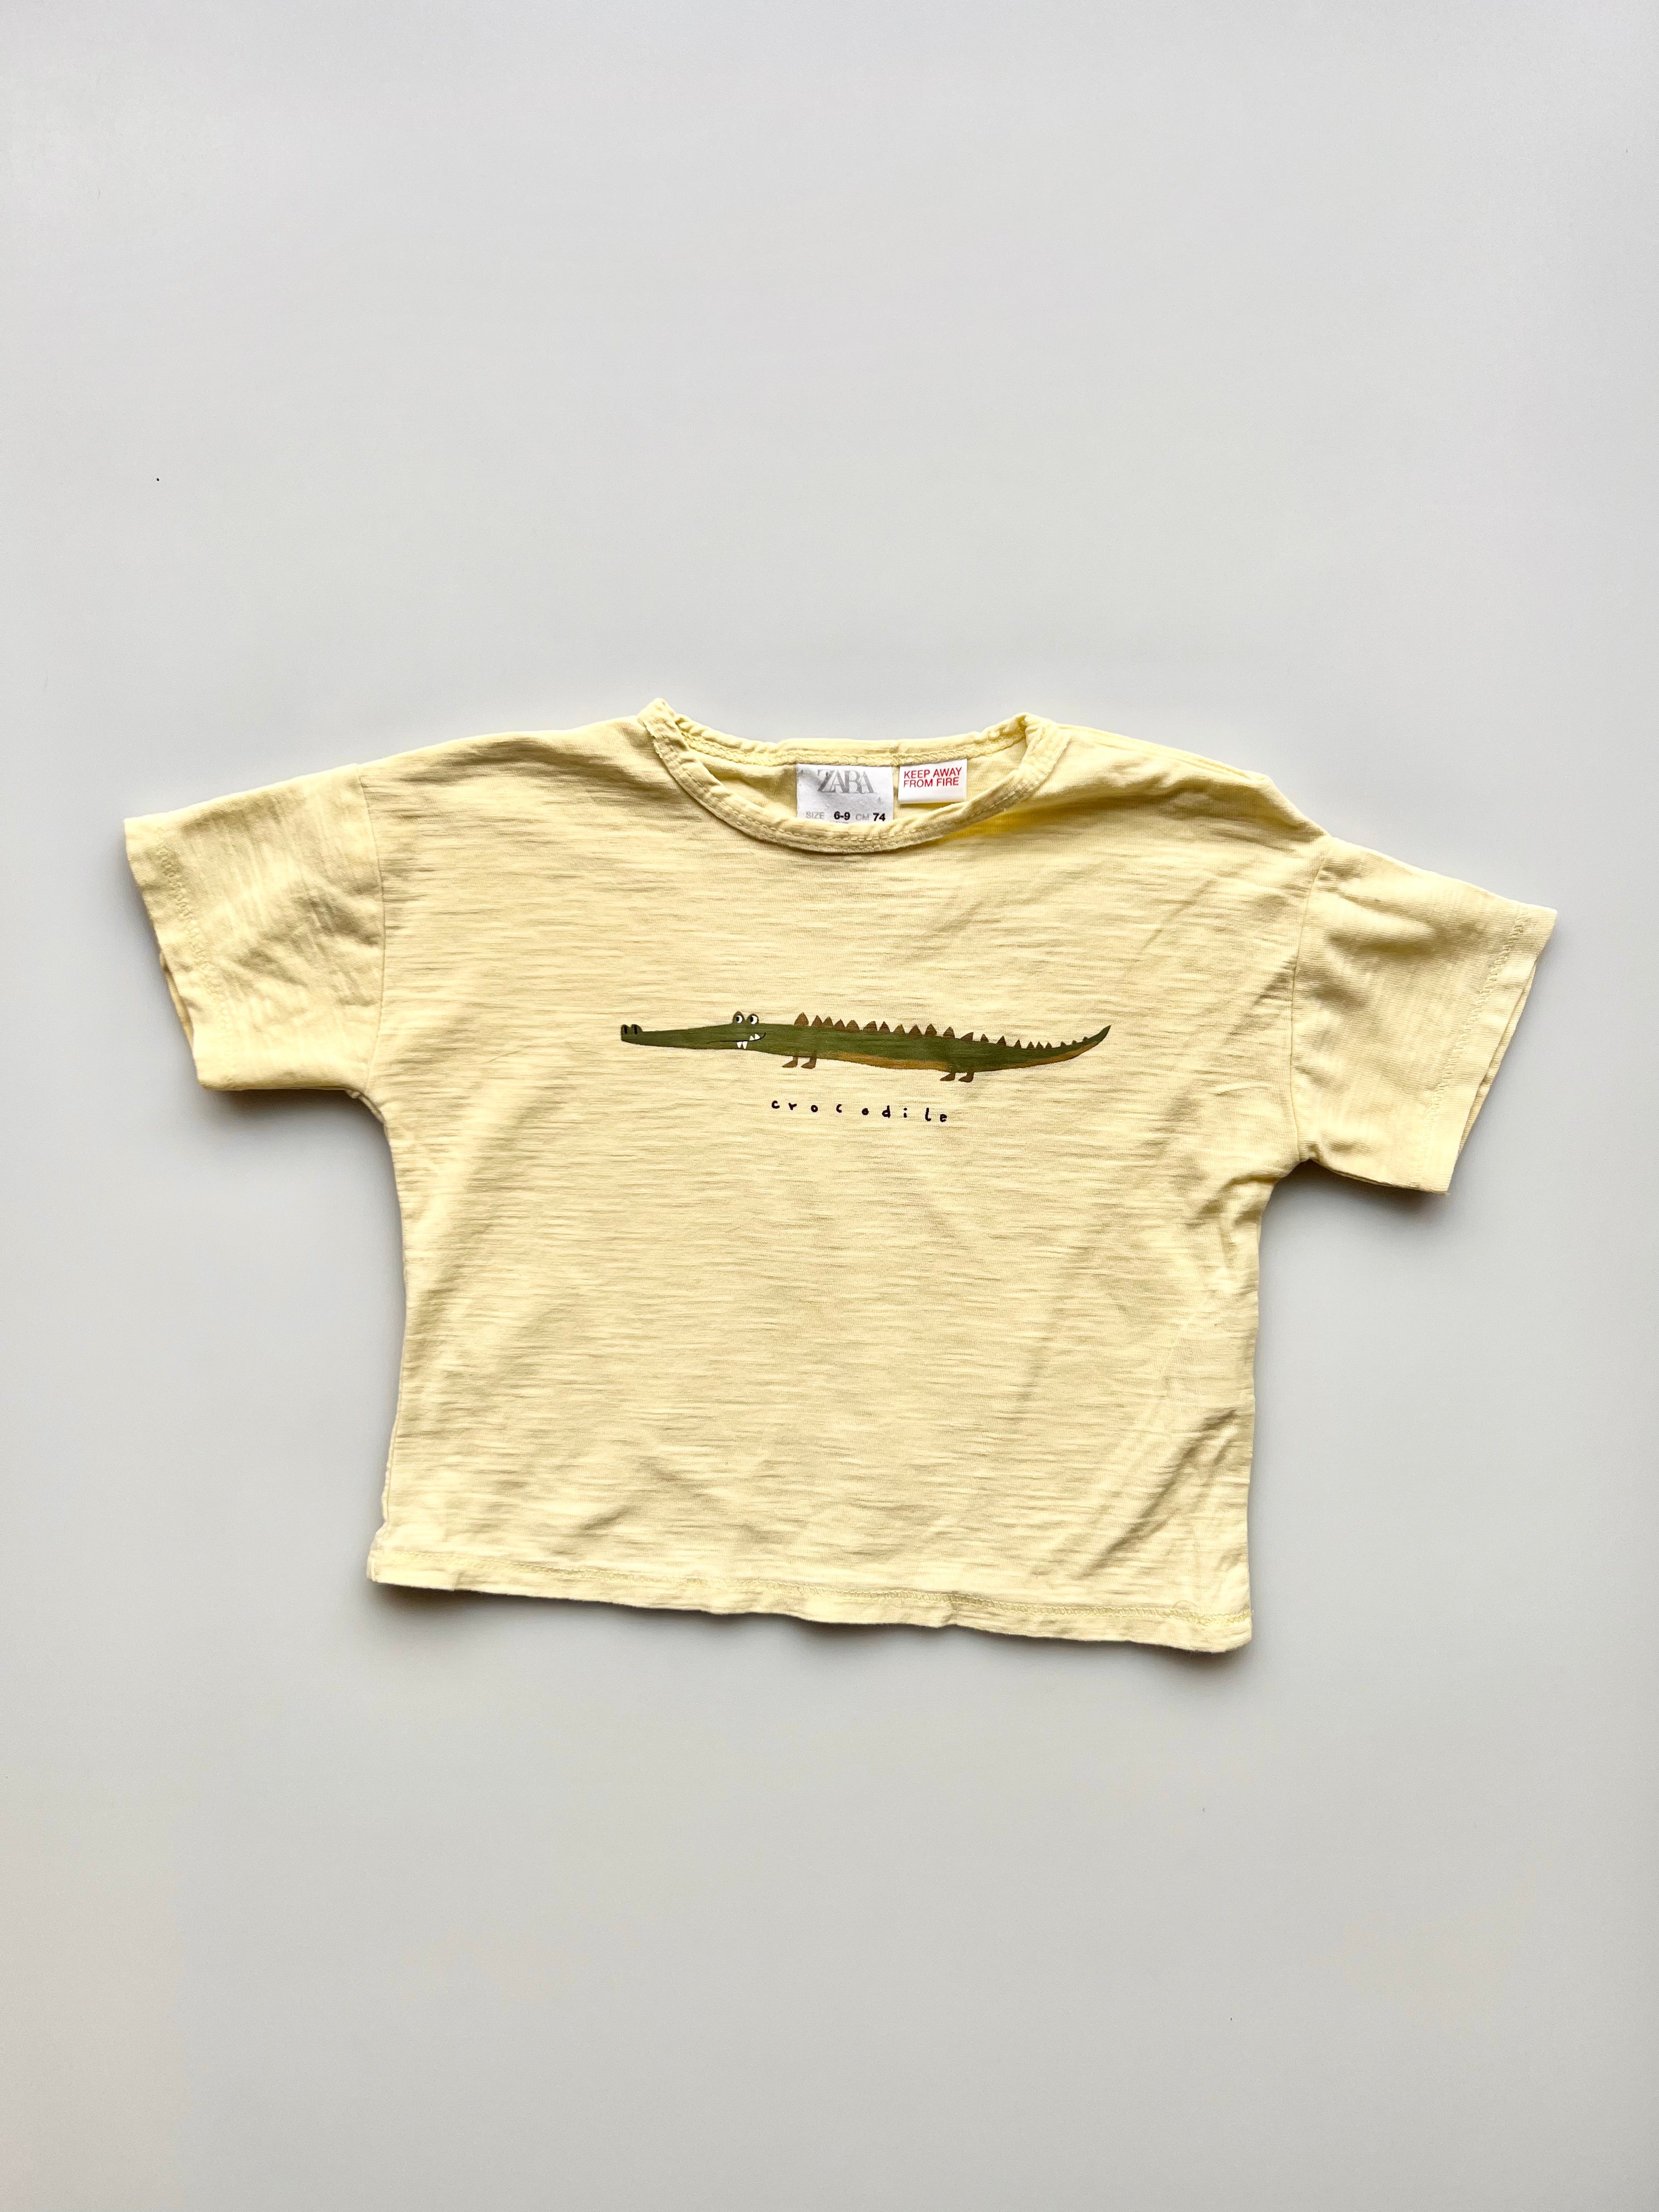 Zara Crocodile Tee Shirt 6-9 Months